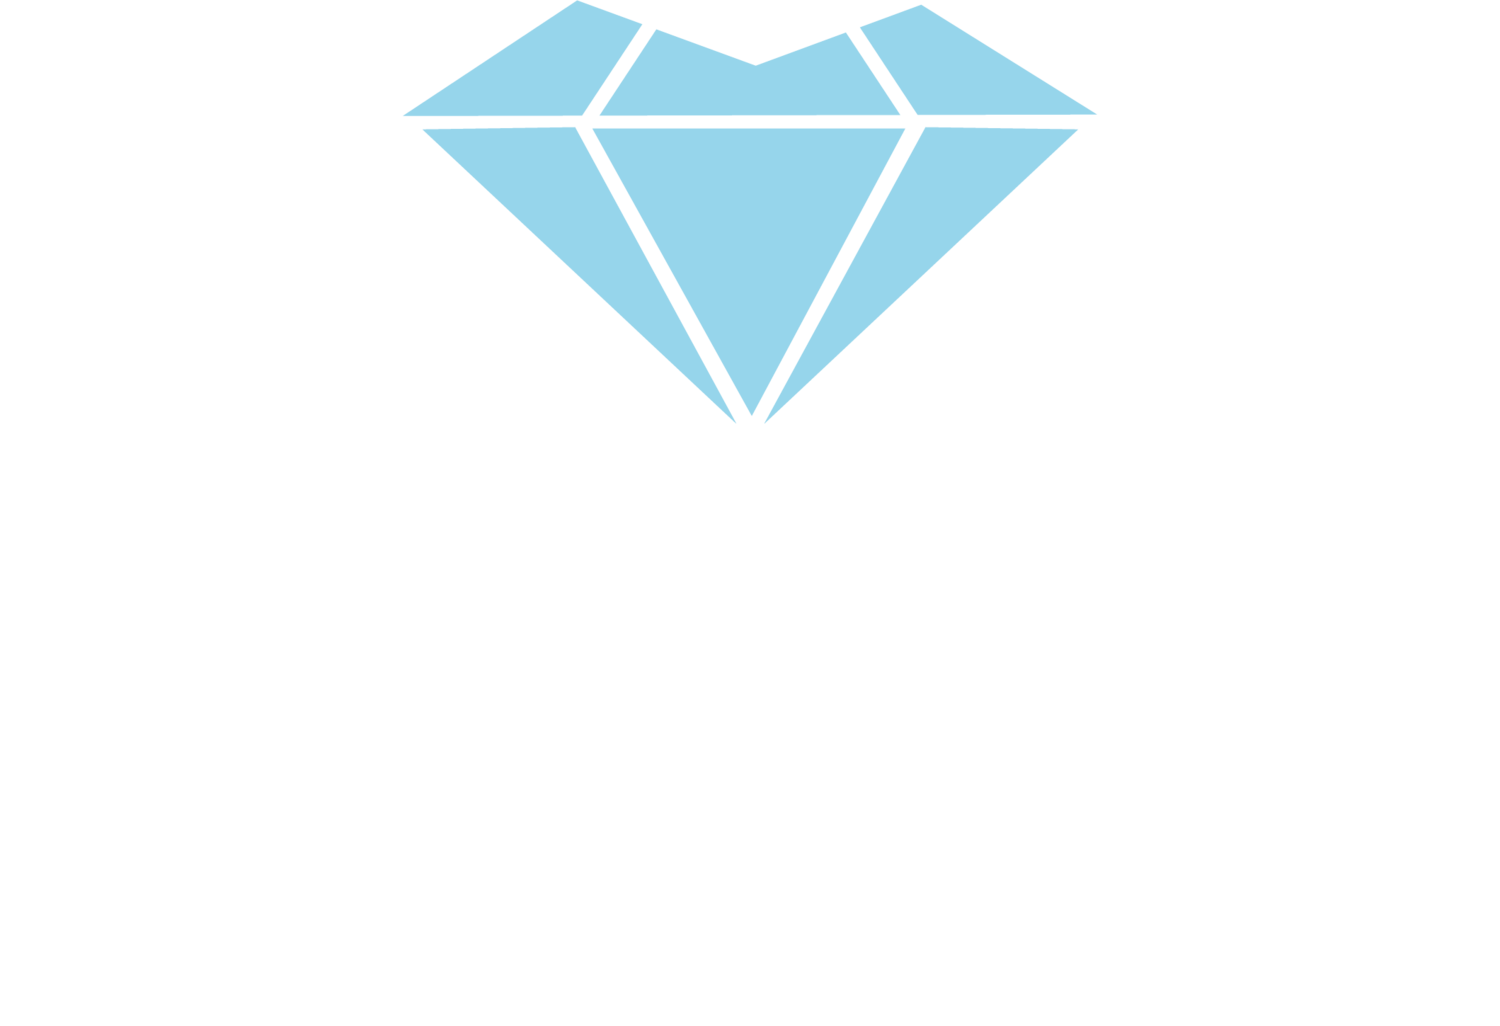 Julee's Jewelry